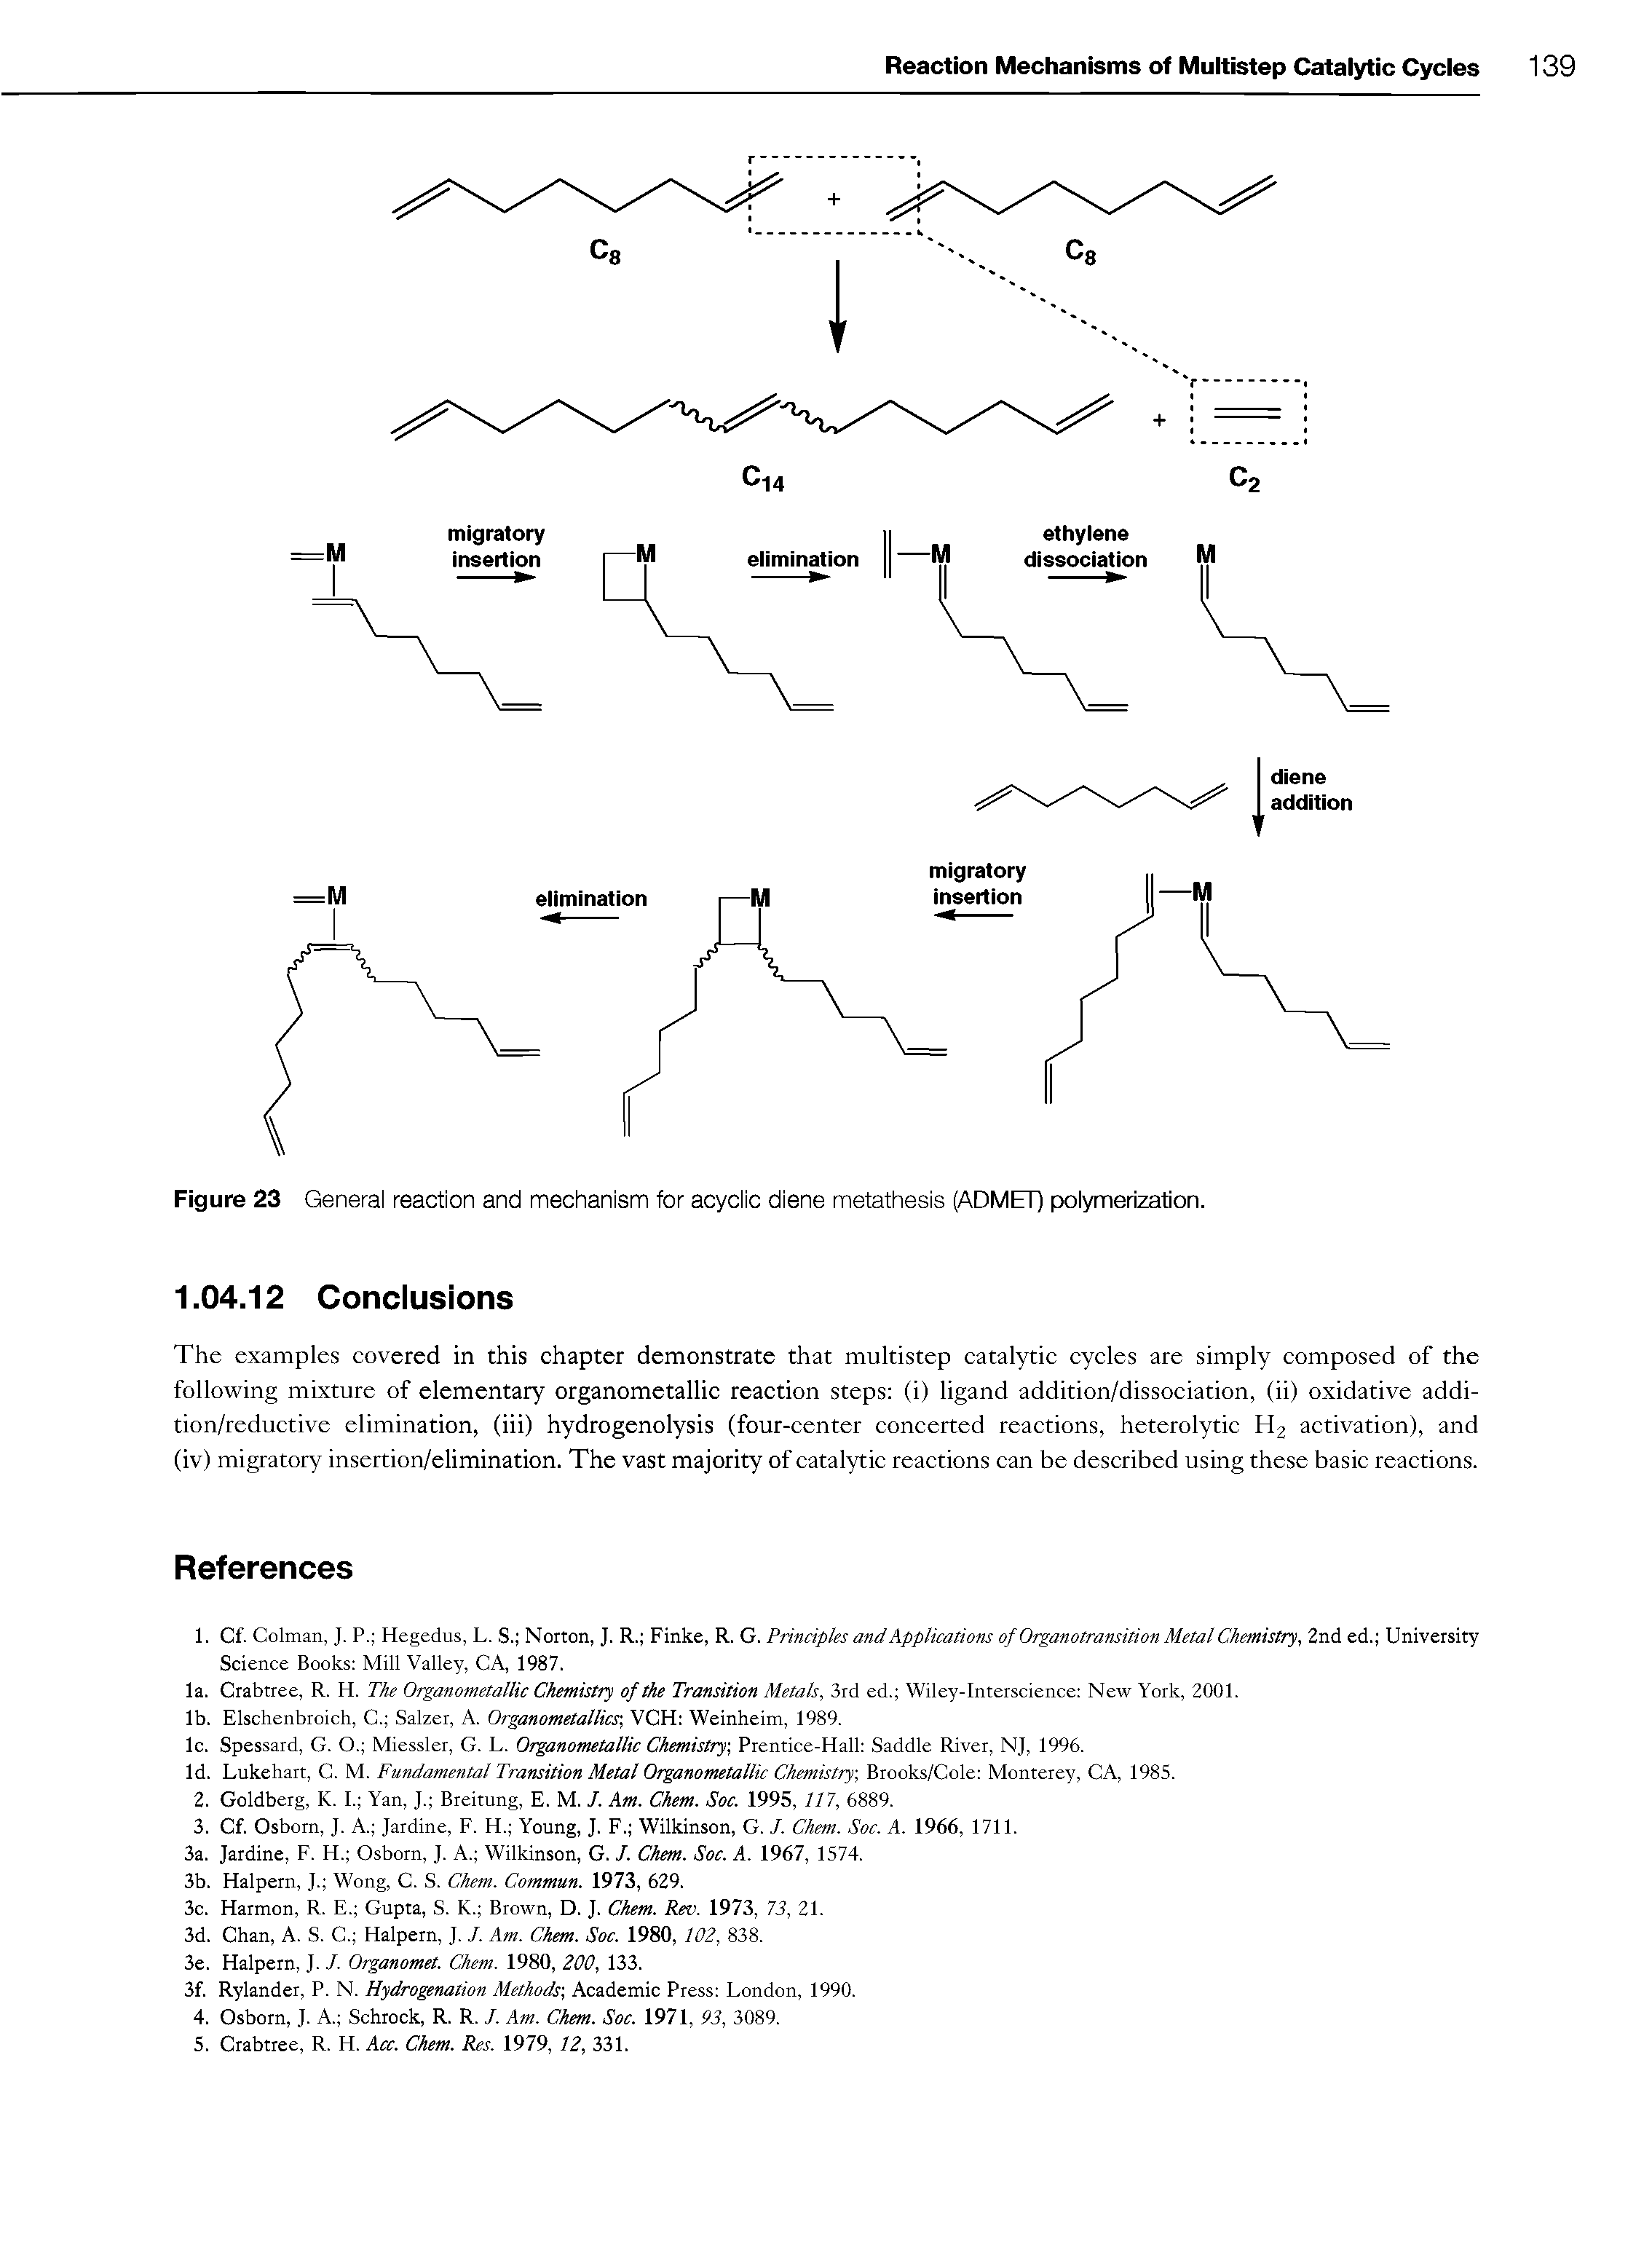 Figure 23 General reaction and mechanism for acyclic diene metathesis (ADMET) polymerization.